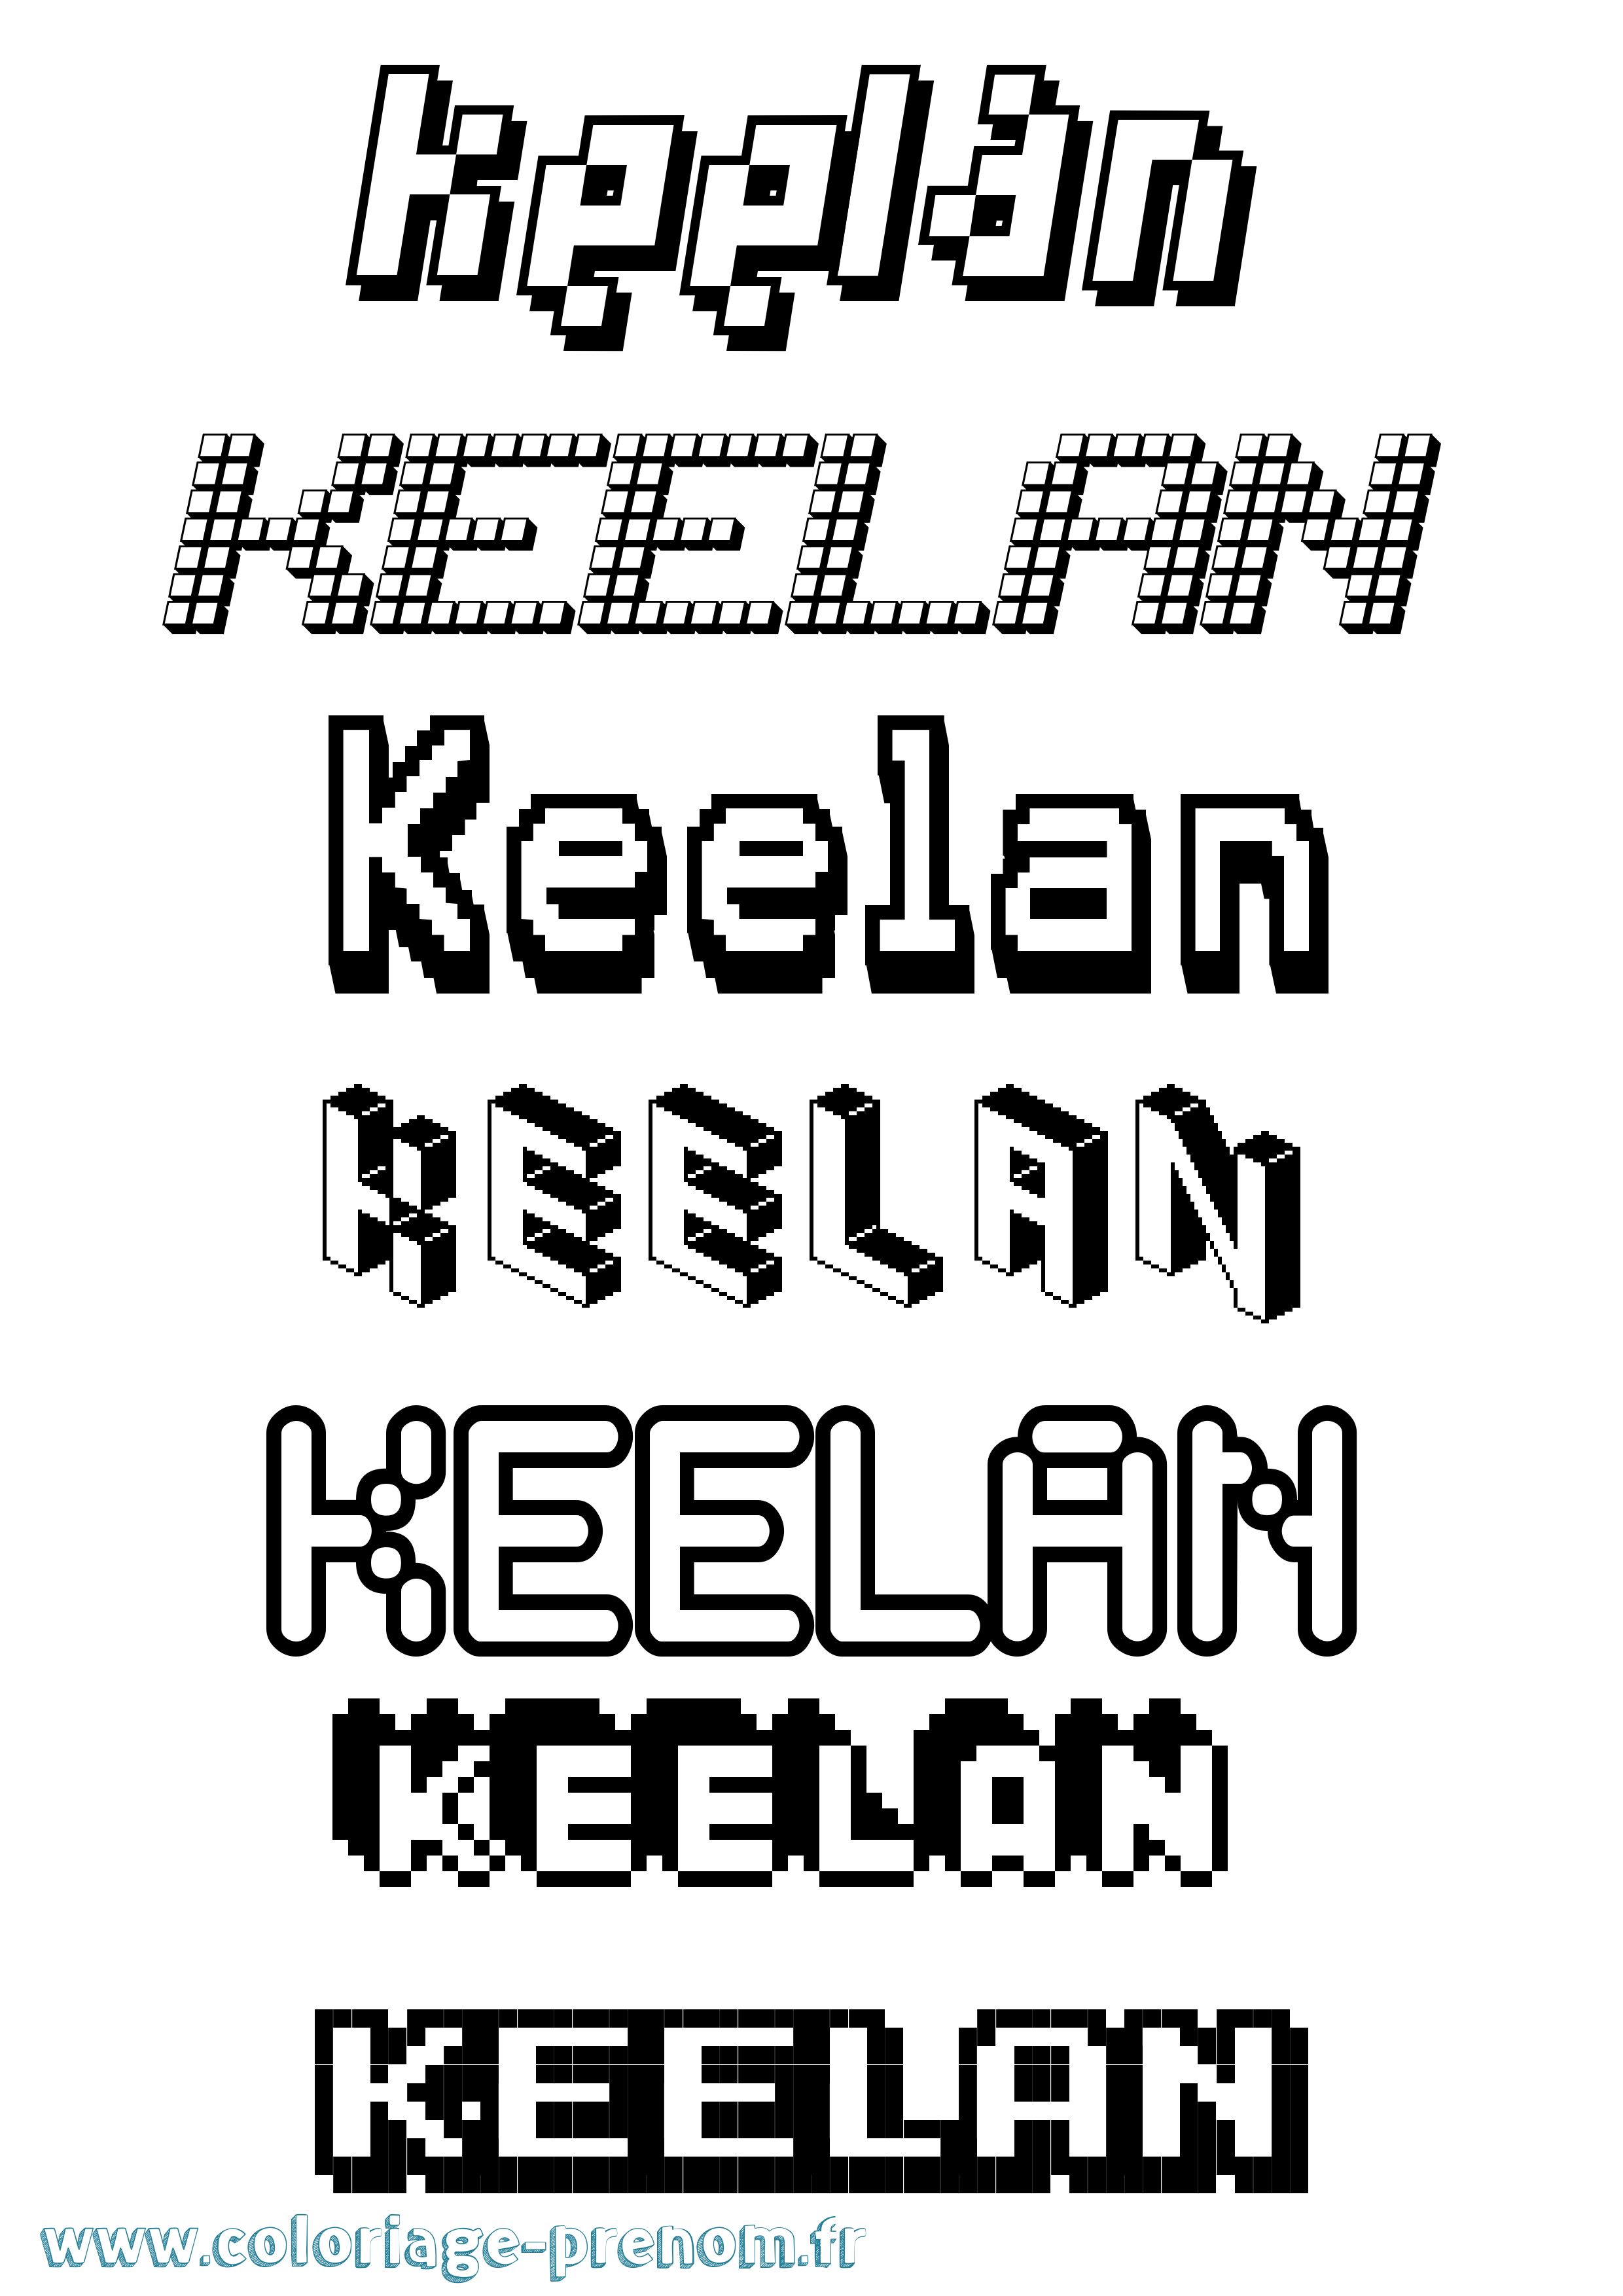 Coloriage prénom Keelan Pixel